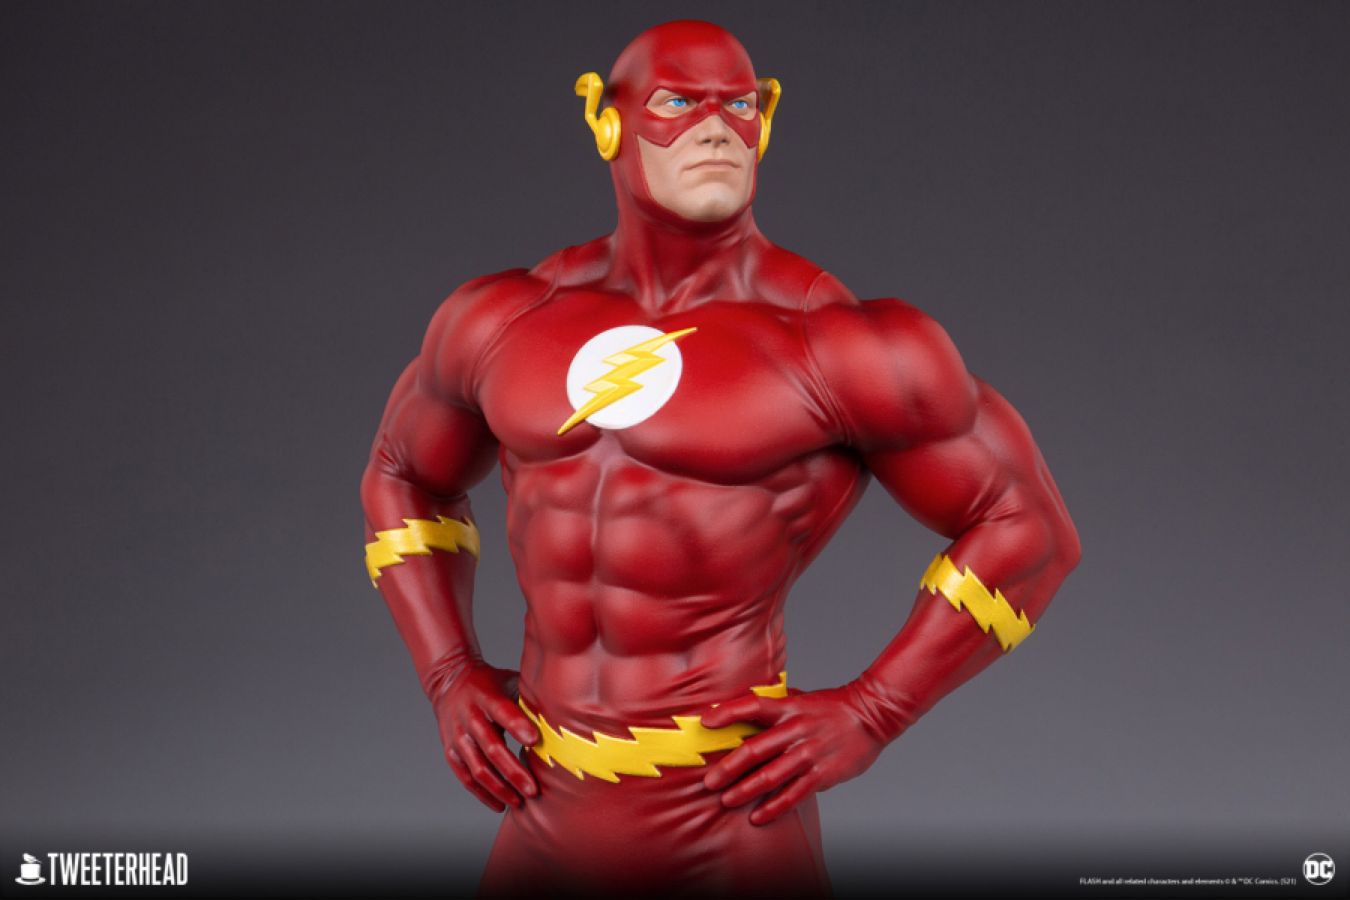 DC Comics - Flash 1:6 Scale Maquette